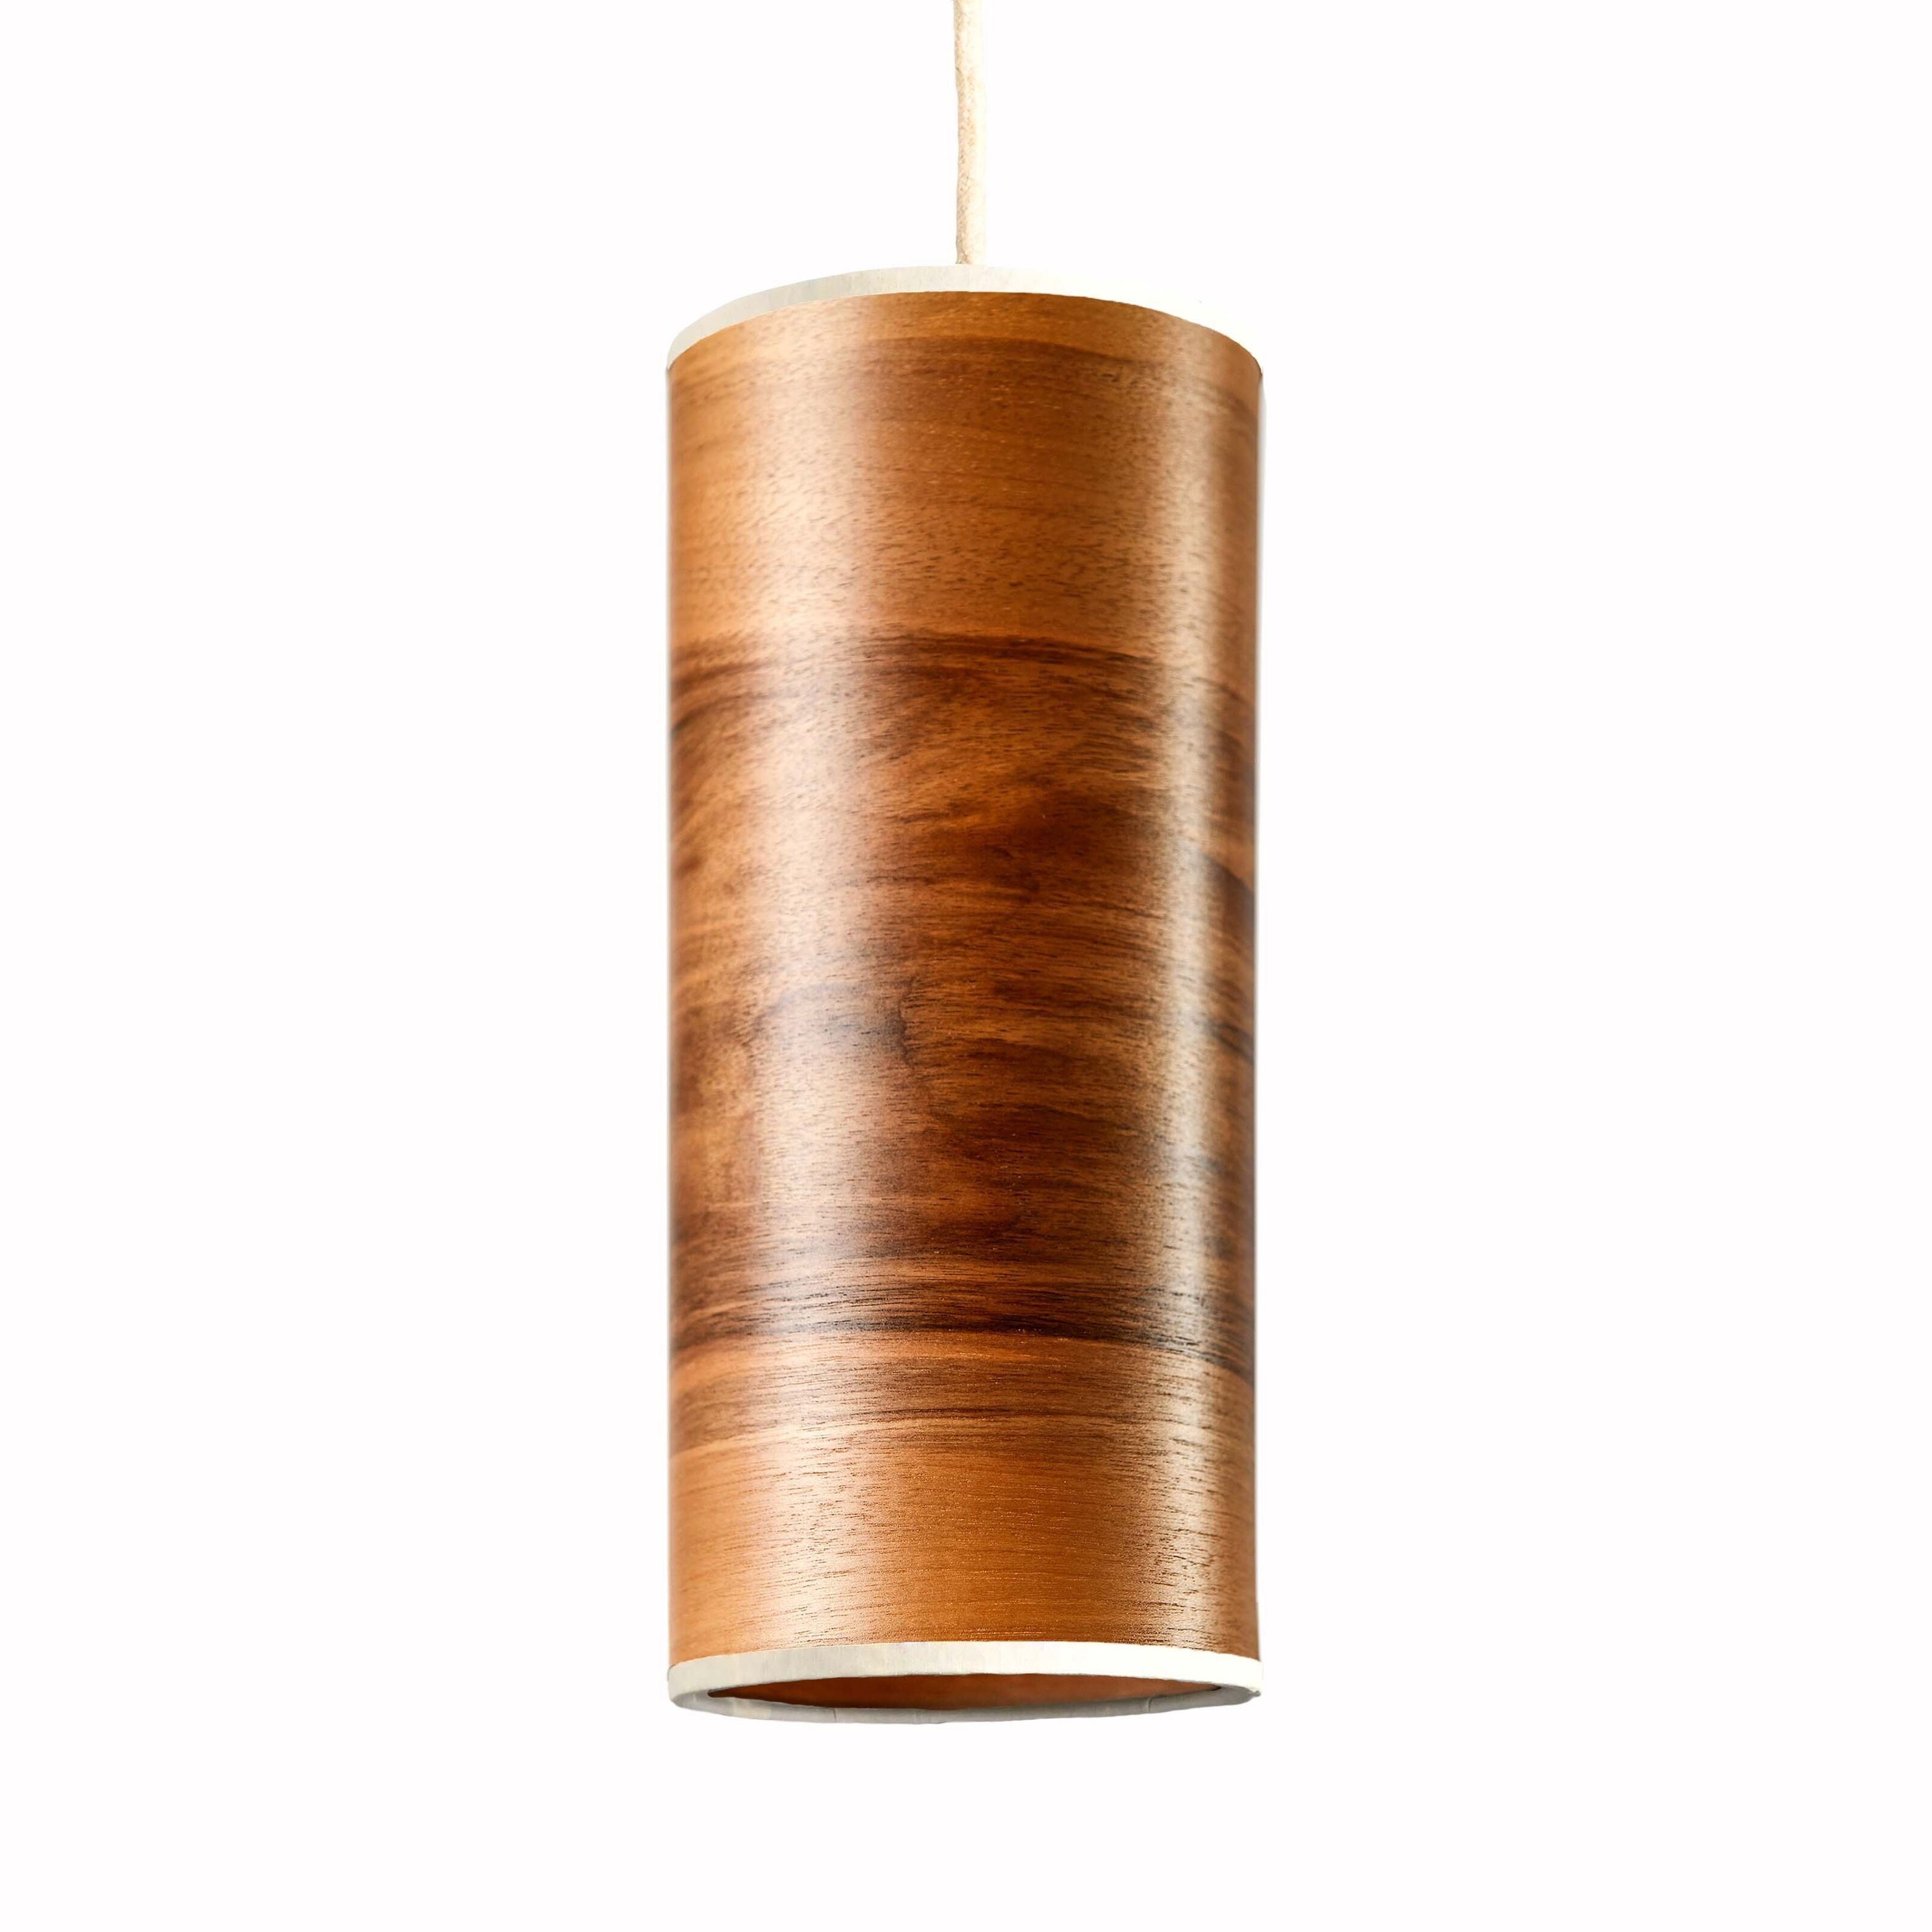 Buy wholesale Nux pendant light | Shade made of wood veneer - European  Walnut - white